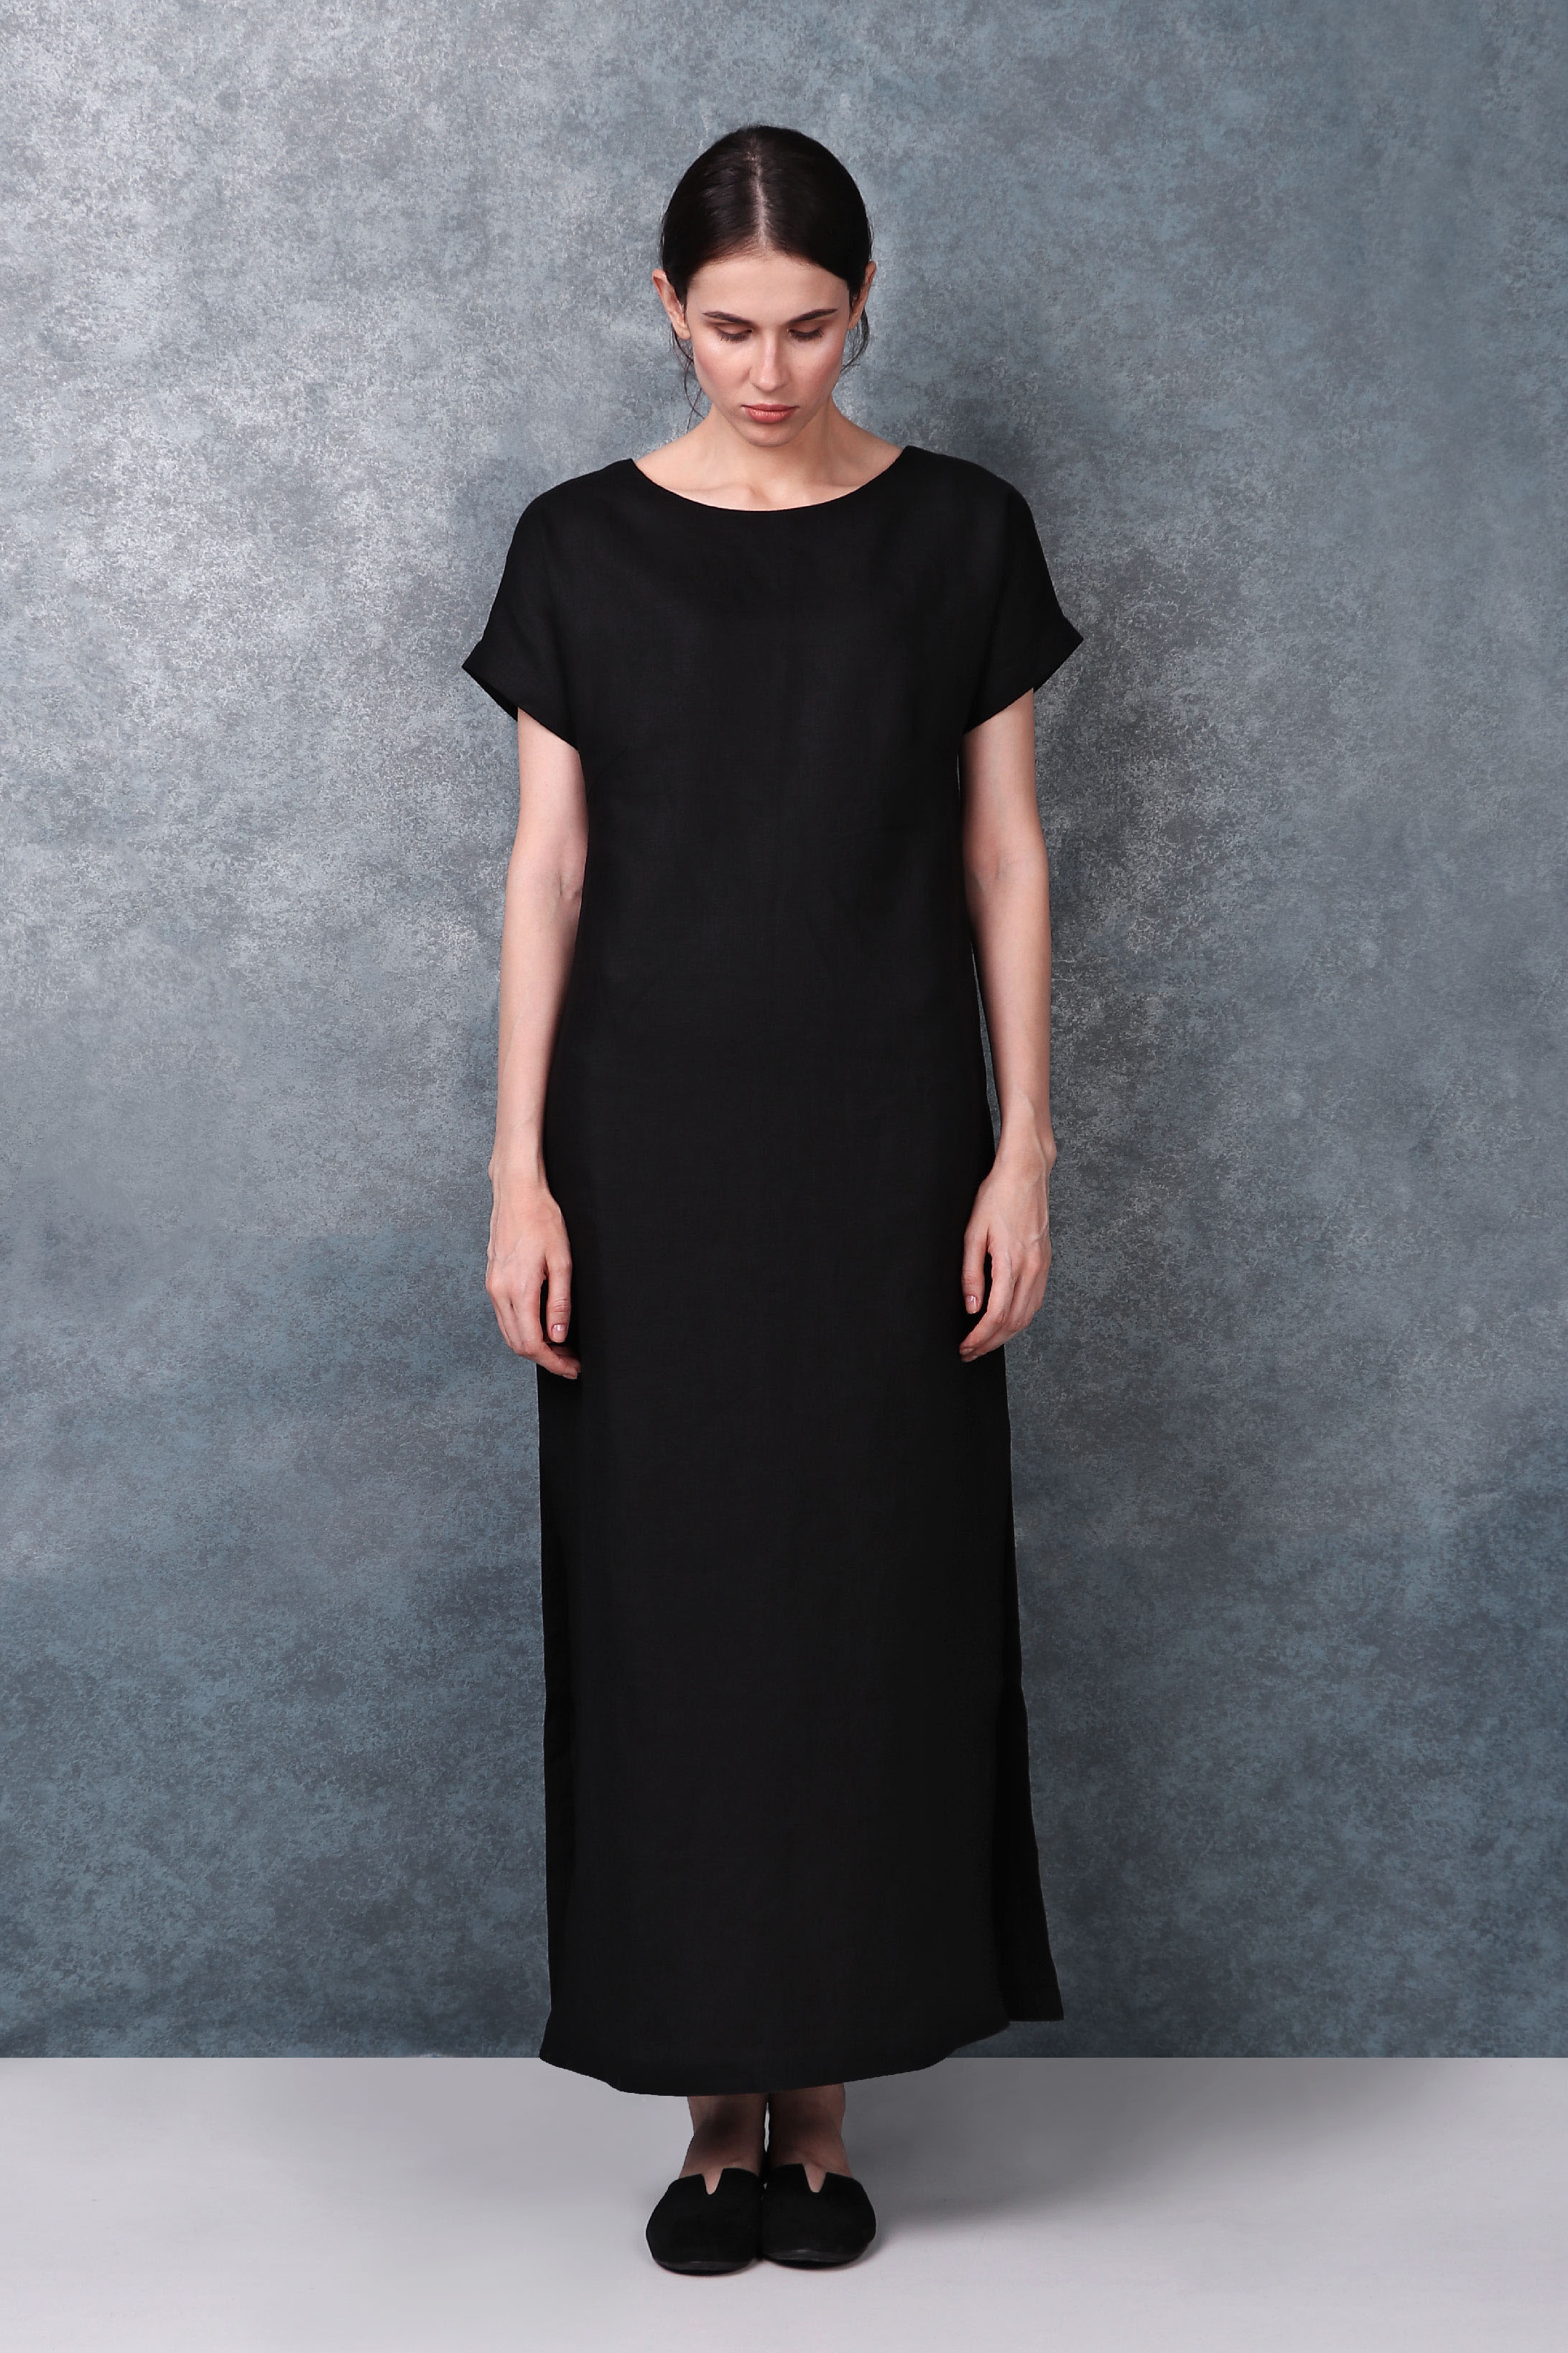 Boat Neck Black Linen Dress By Turn Black-From Andromeda's Wardrobe